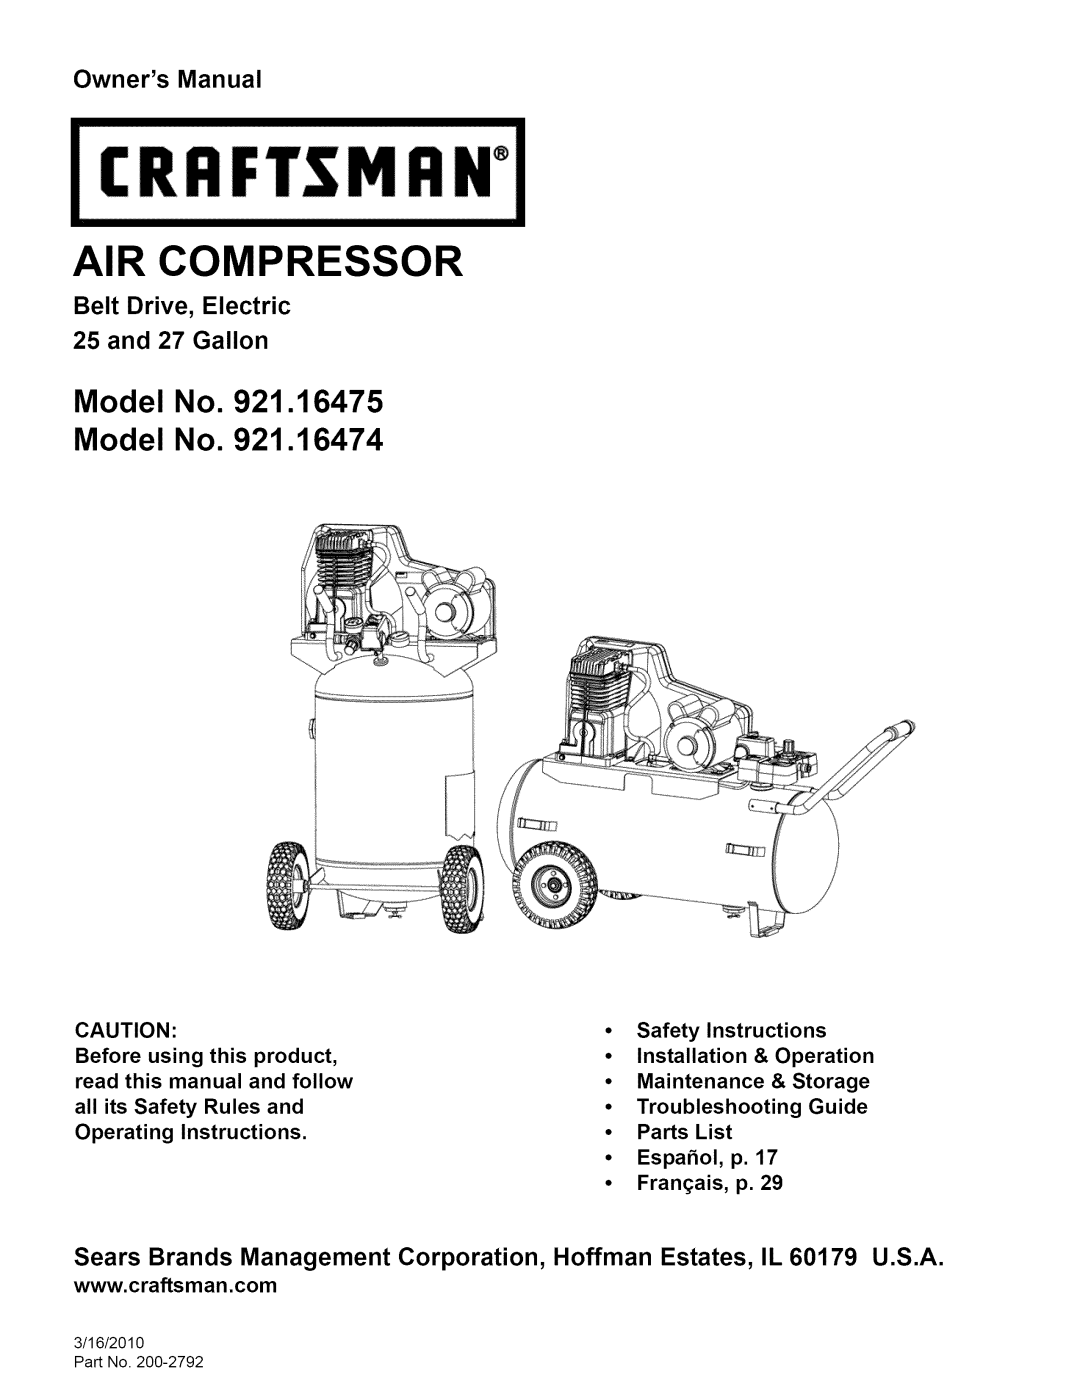 Craftsman 921.16475 owner manual Owners Manual, Belt Drive, Electric 25 and 27 Gallon, Air Compressor, Model No Model No 